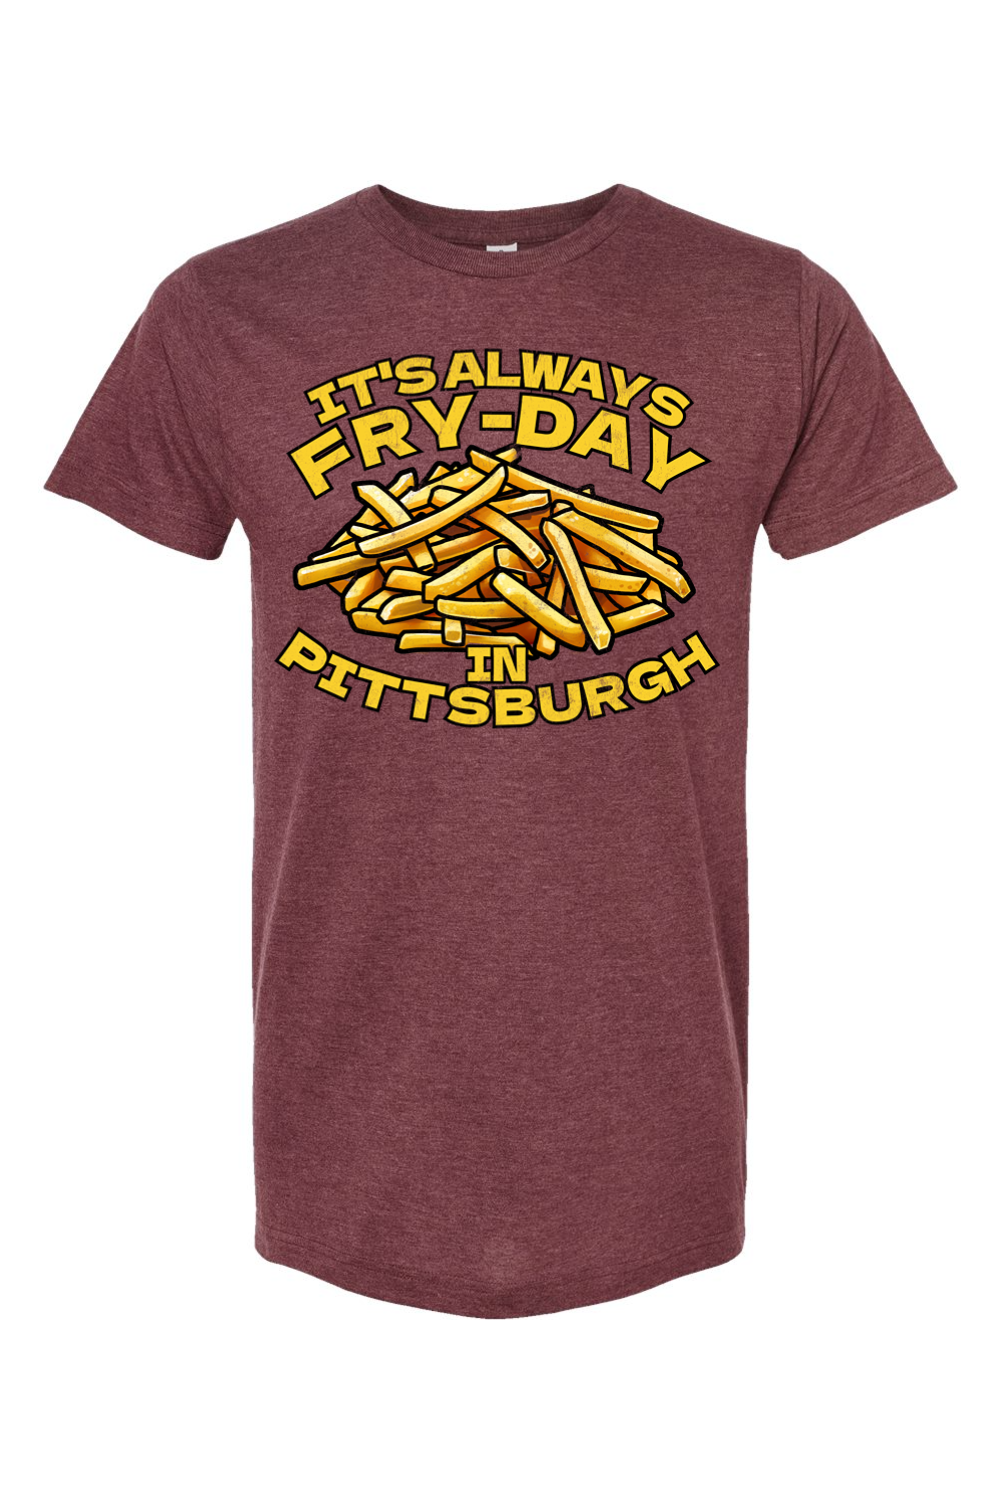 It's Always Fry-Day in Pittsburgh - Yinzylvania